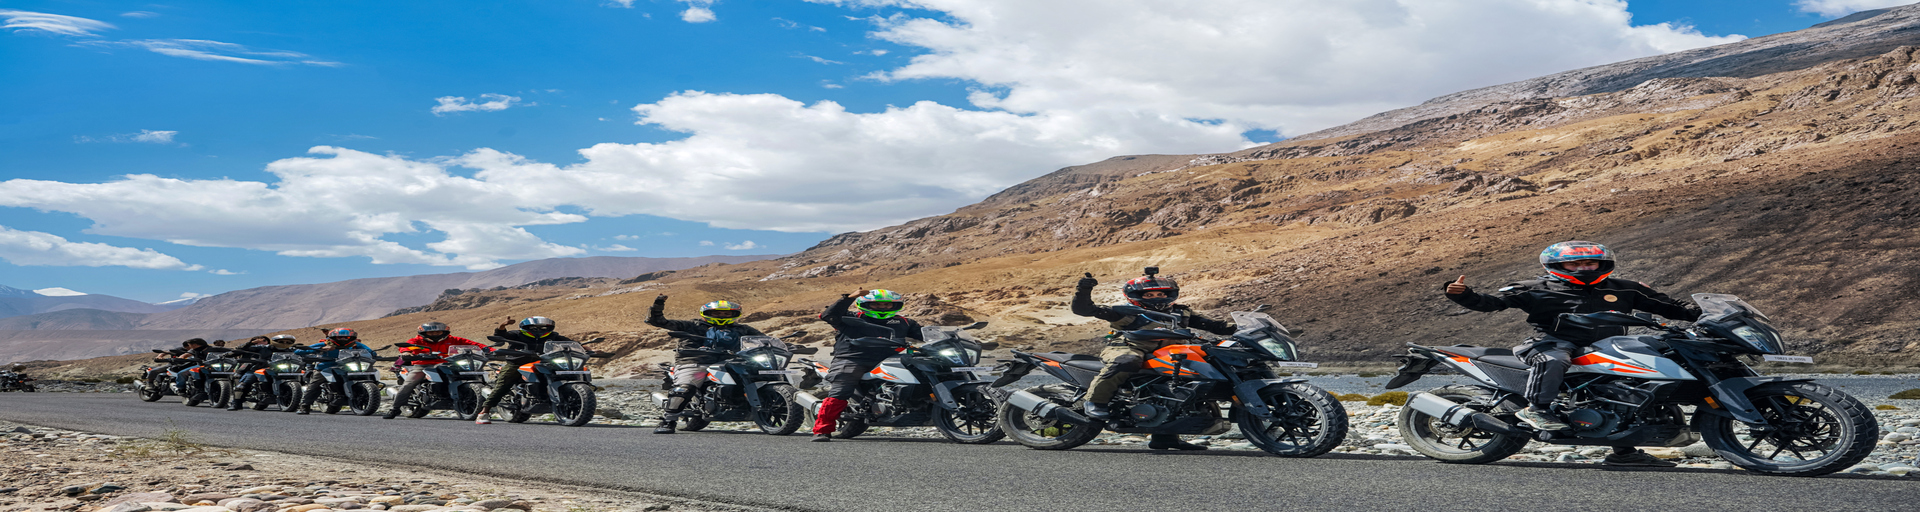 Ladakh_Bike_Tour_Cover_Image